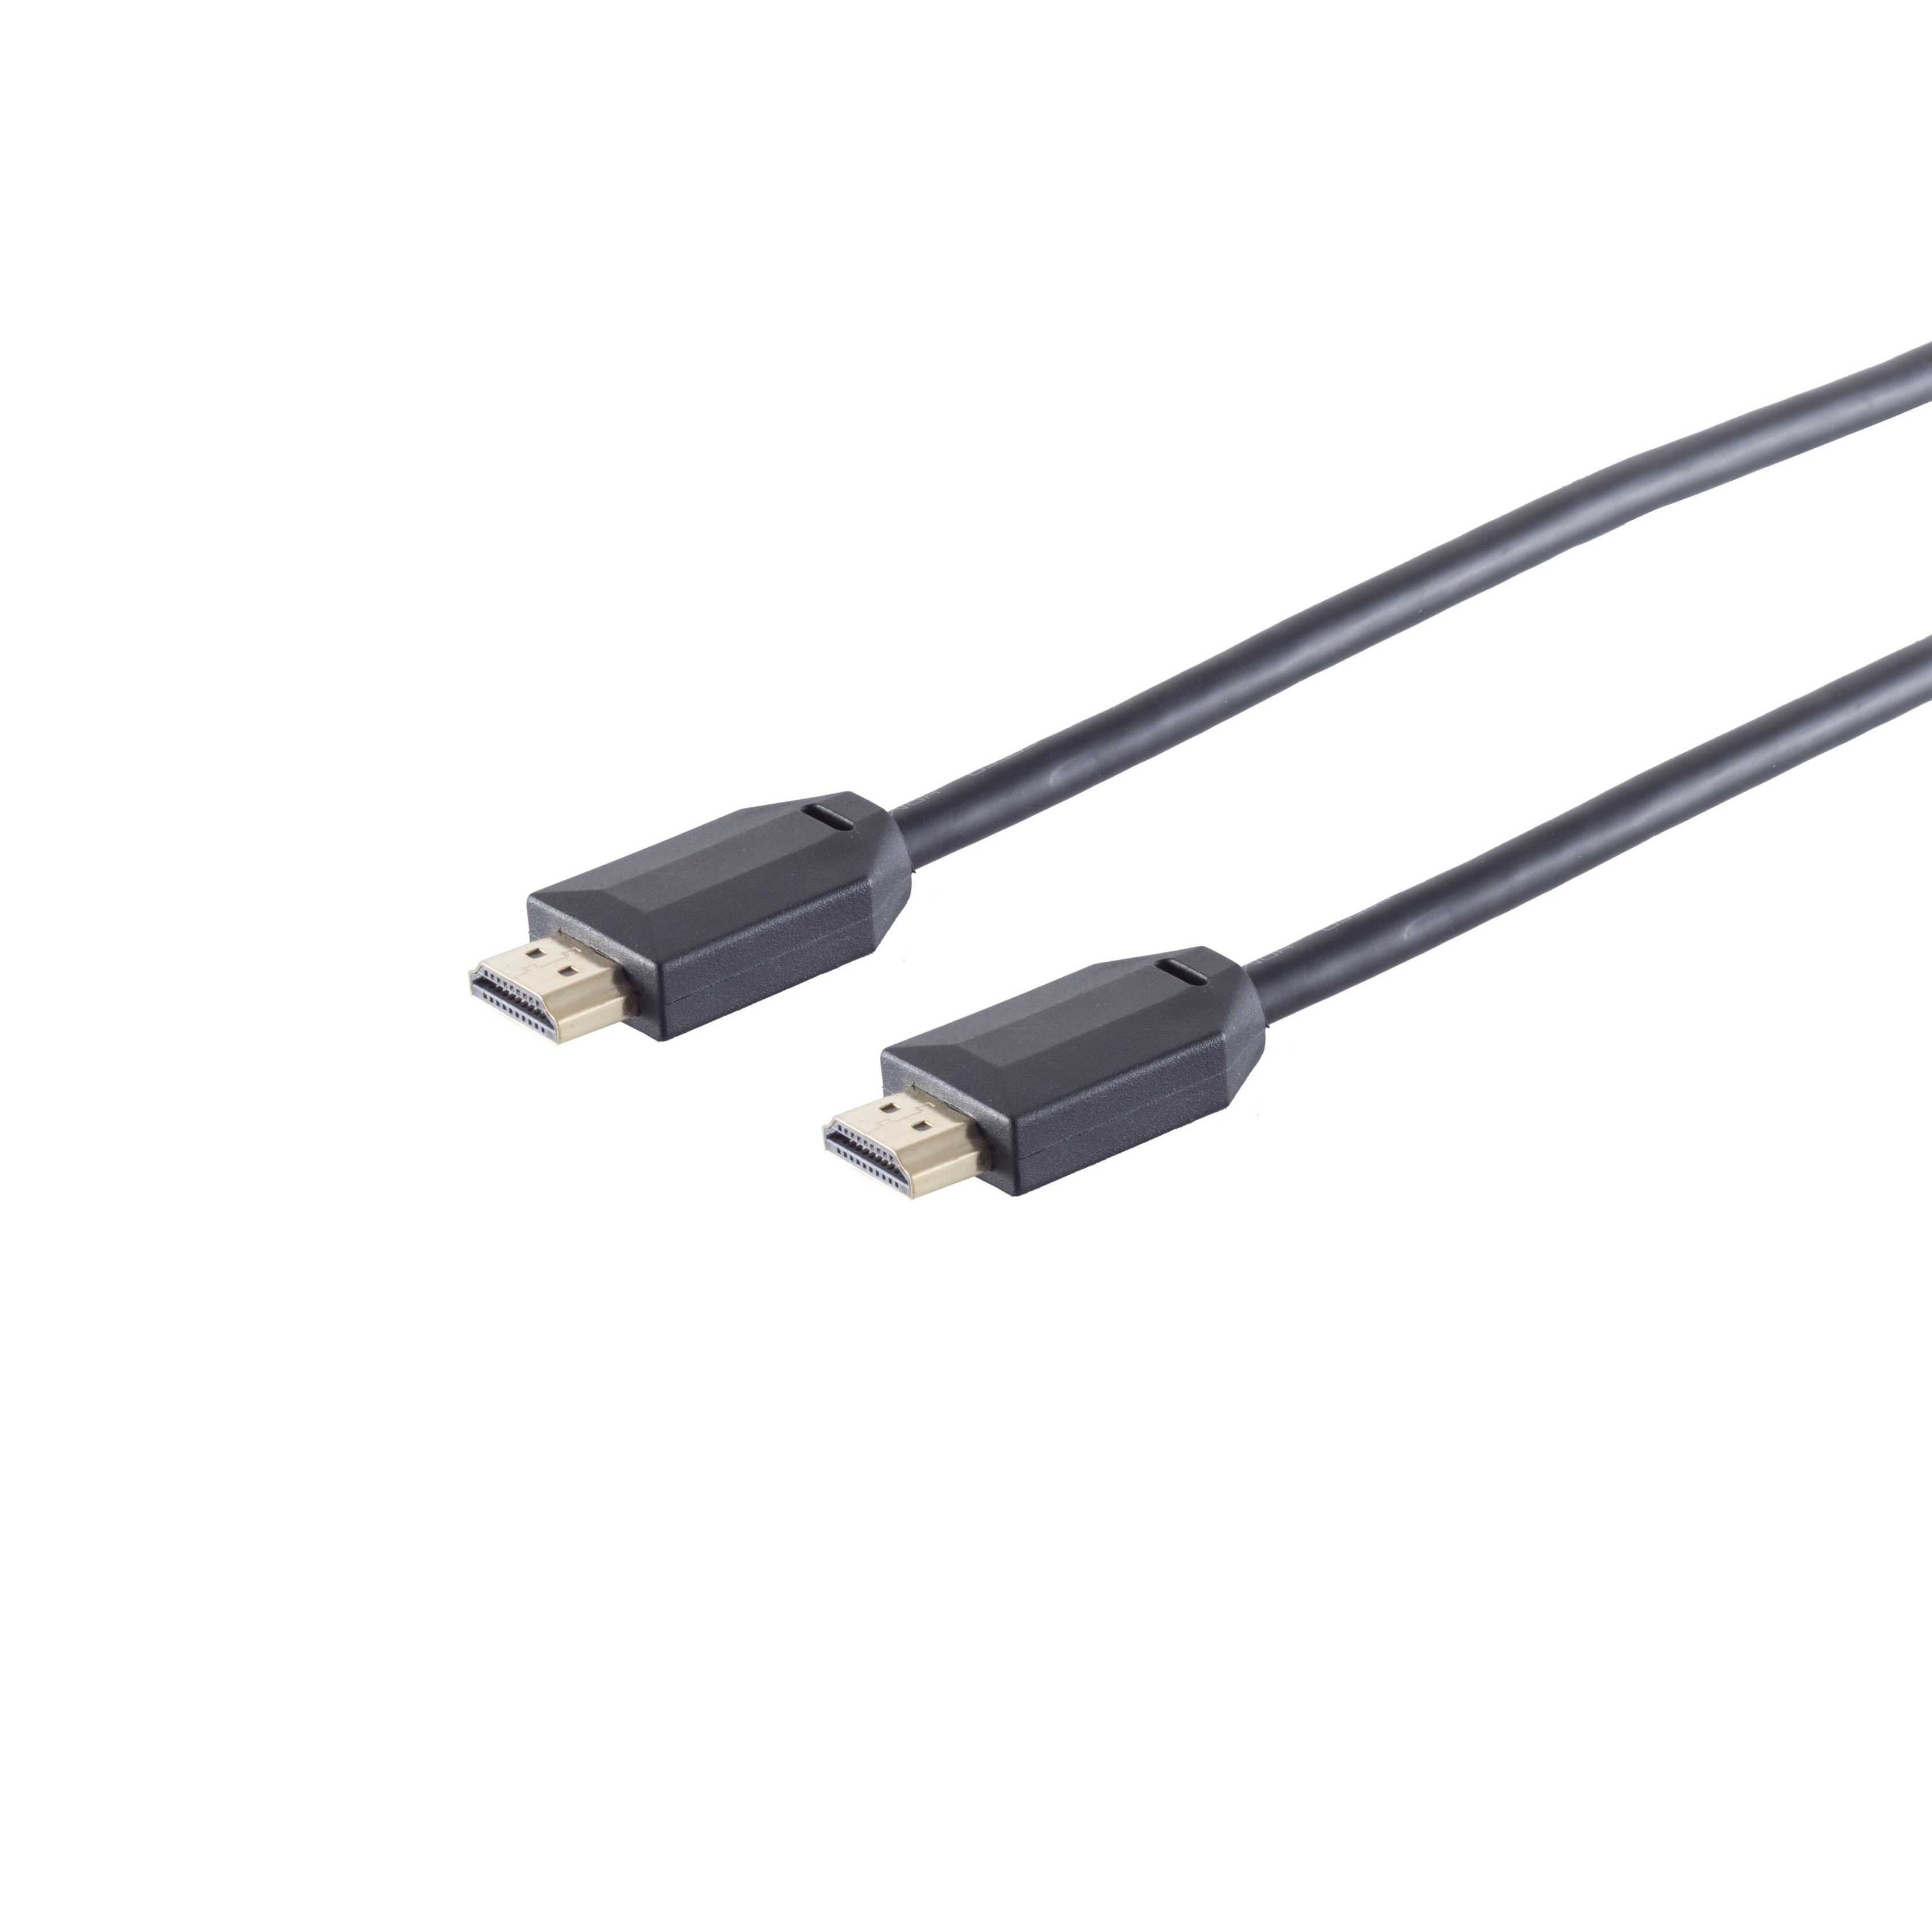 0,5m HDMI MAXIMUM 10K, Kabel, schwarz, HDMI CONNECTIVITY PVC, S/CONN Kabel Ultra